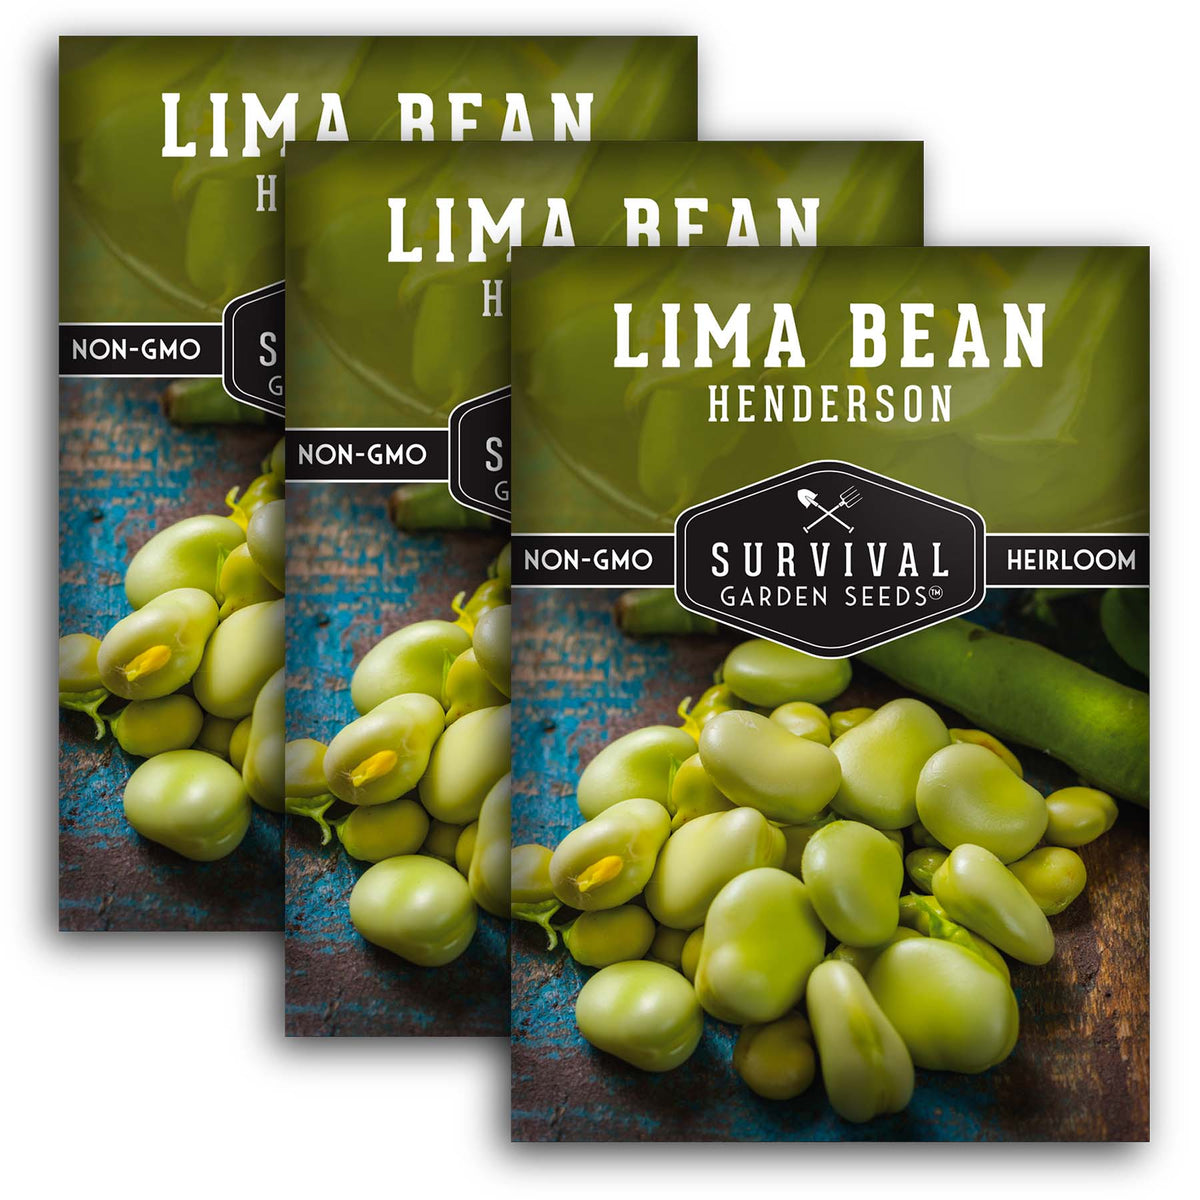 Henderson Lima Bean Seeds